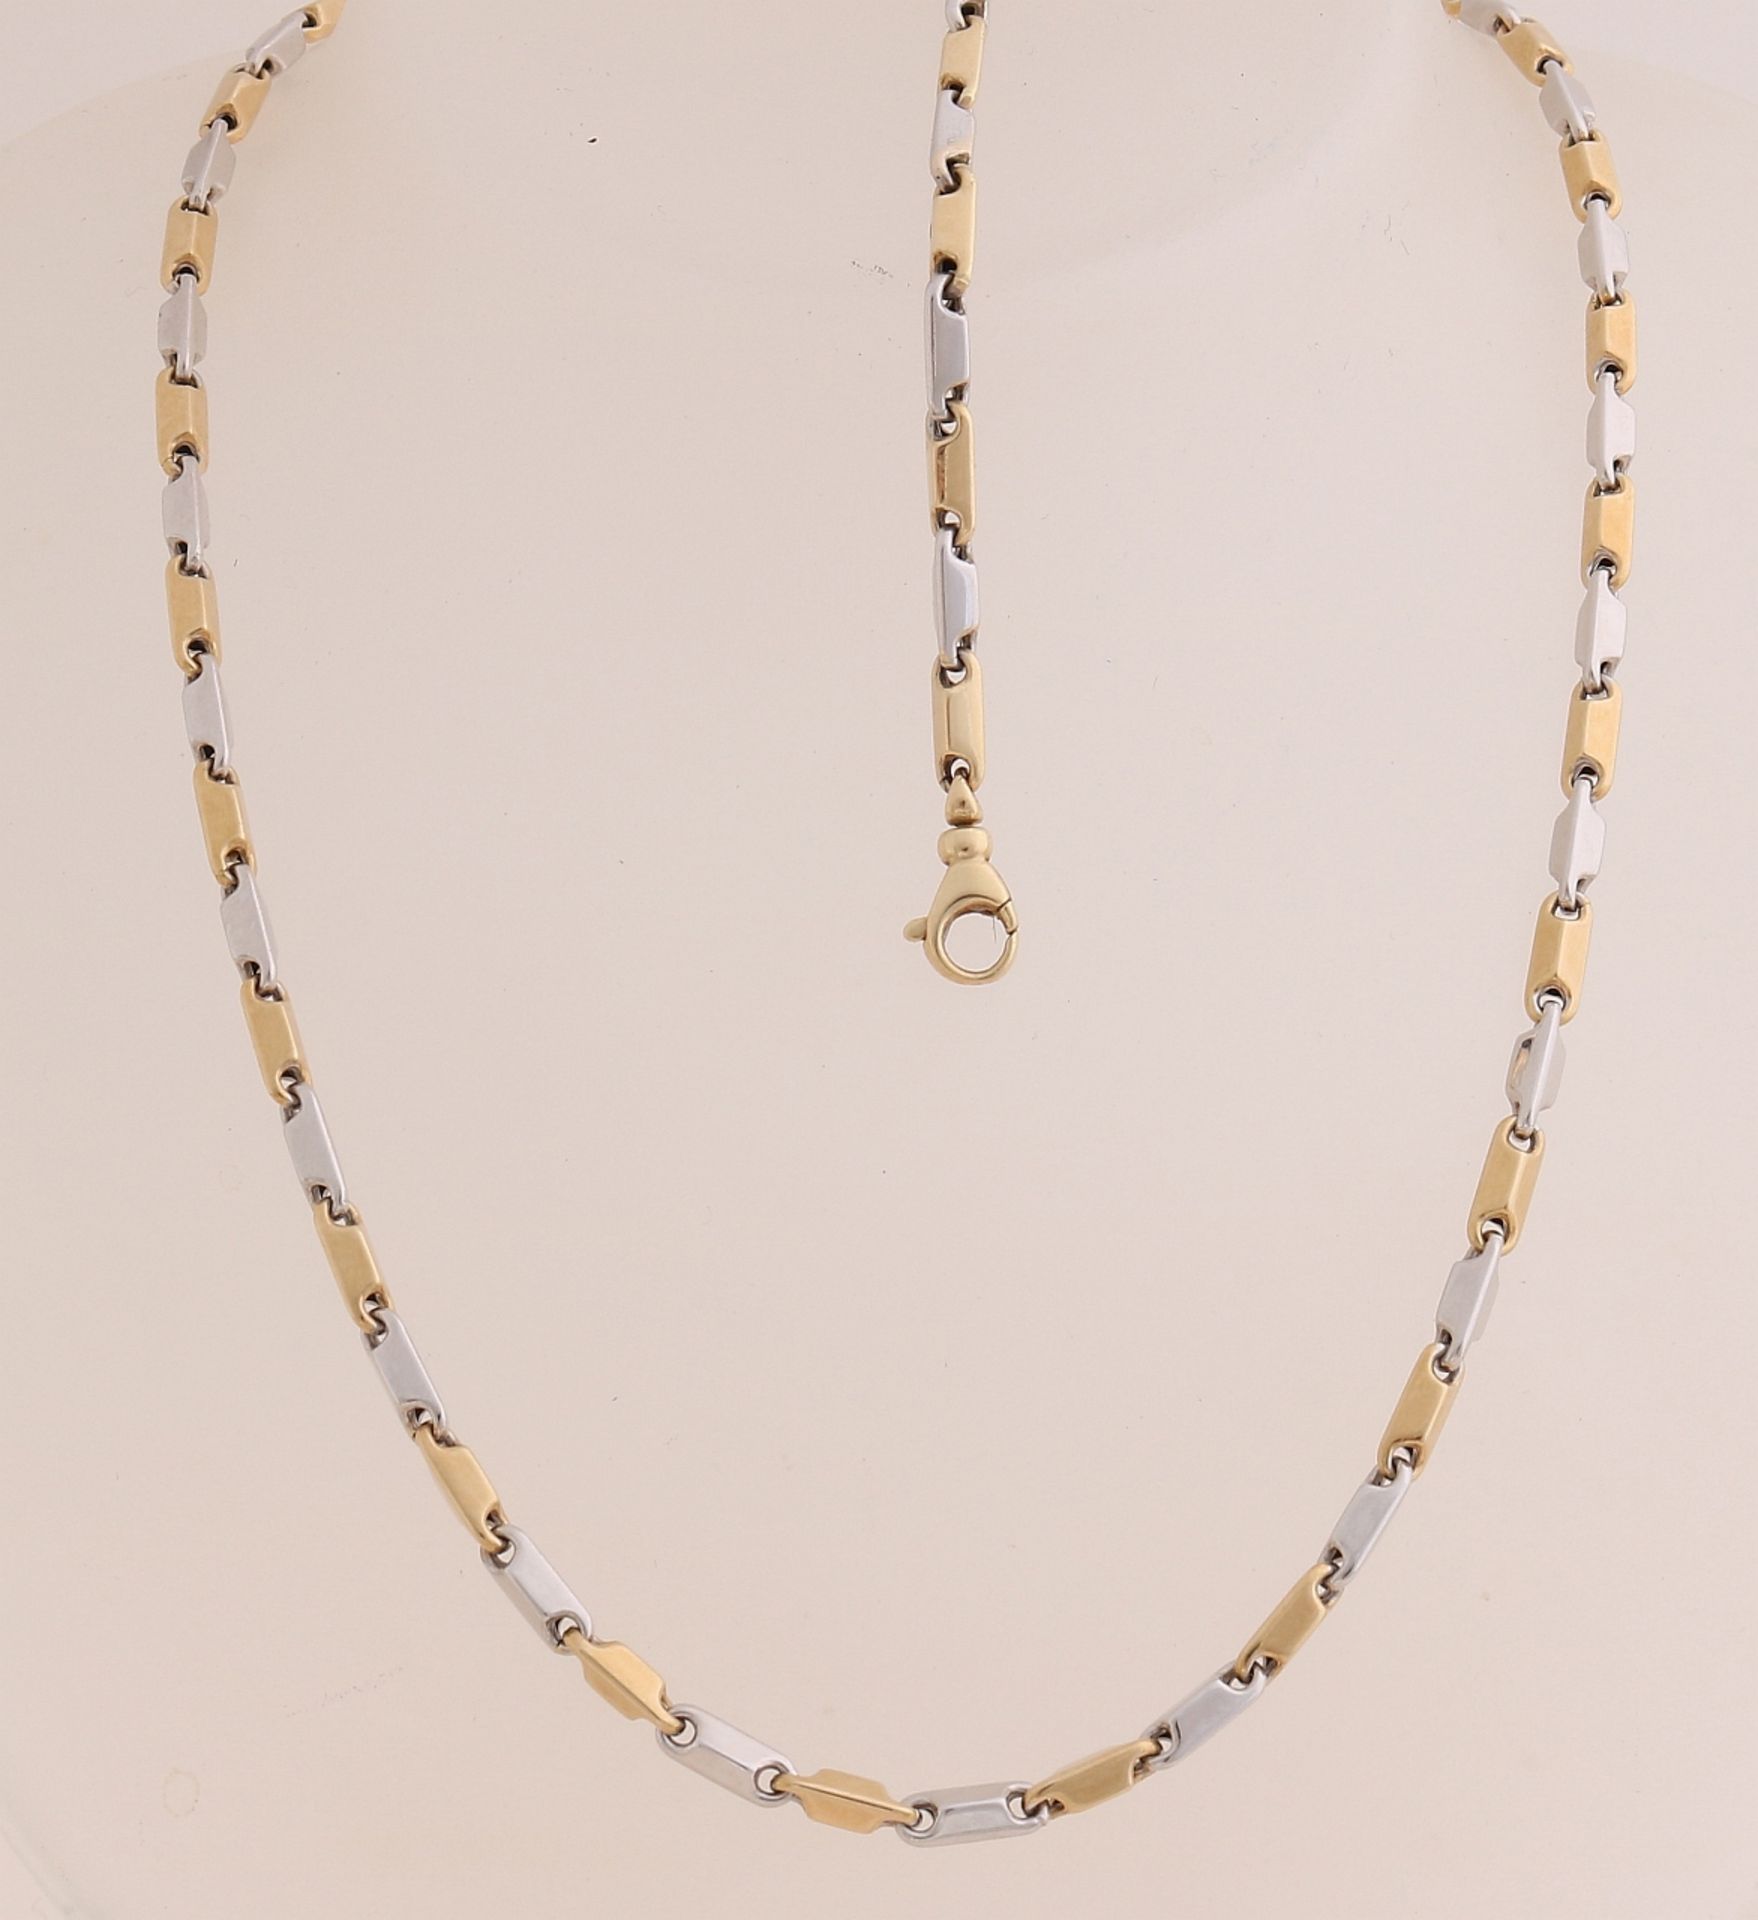 Gold bracelet and necklace